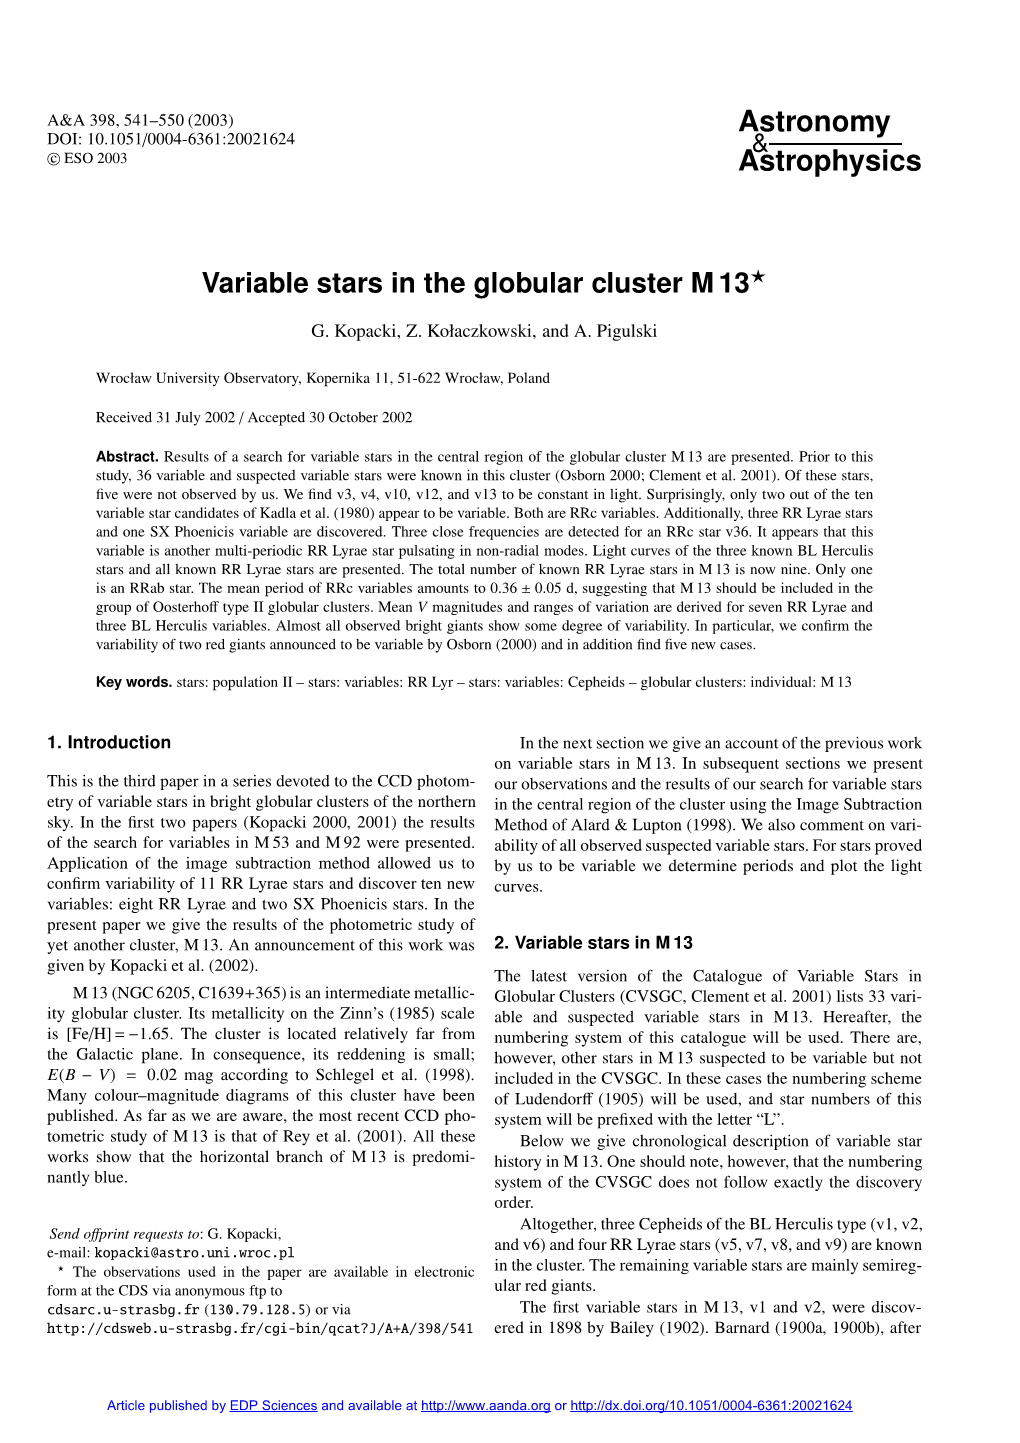 Variable Stars in the Globular Cluster M 13?